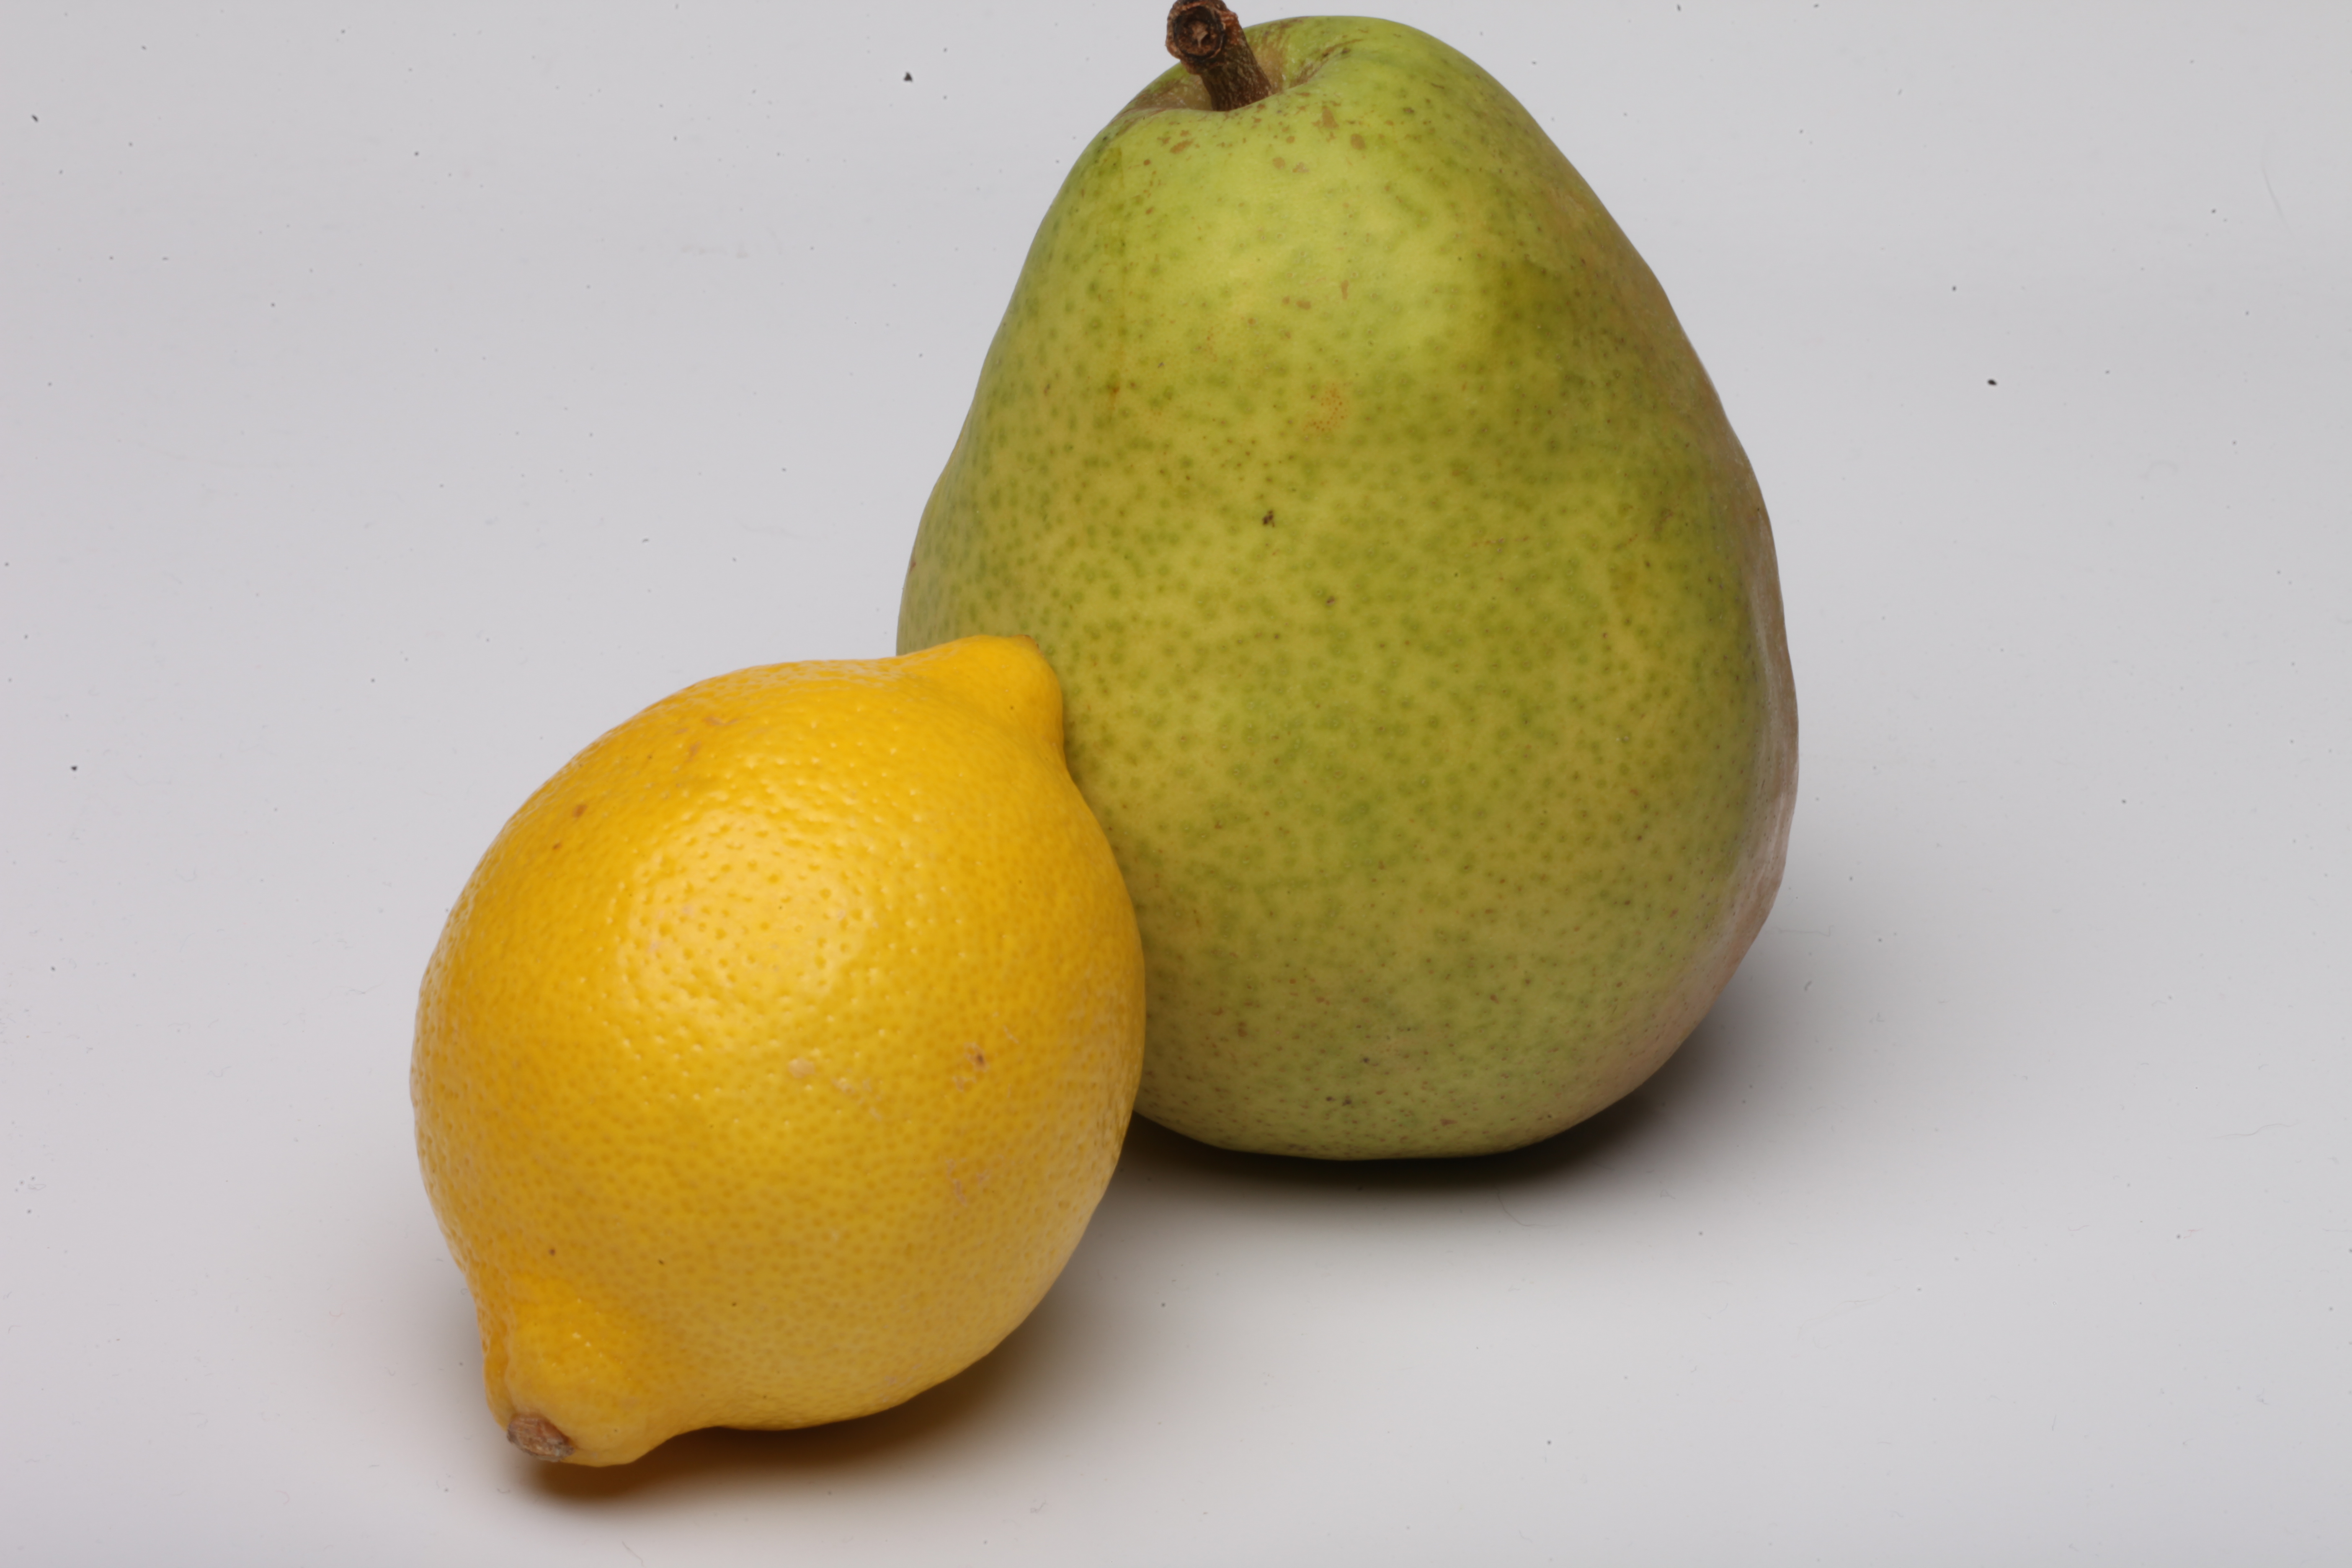 Pear and lemon isolated on white. photo